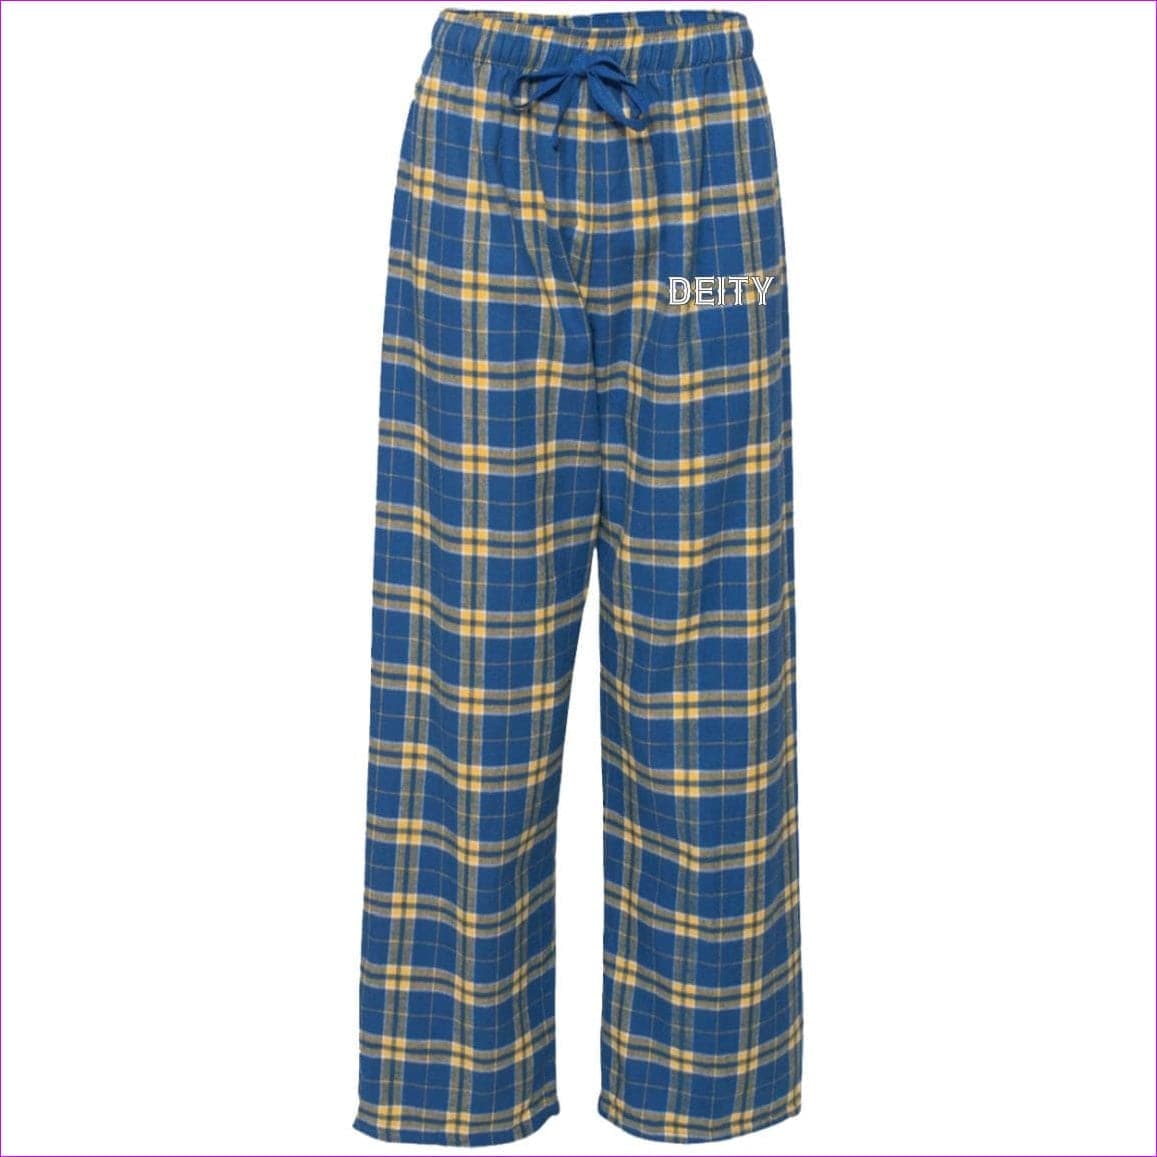 Royal/Gold - Deity Flannel Pants - unisex pajamas Pants at TFC&H Co.